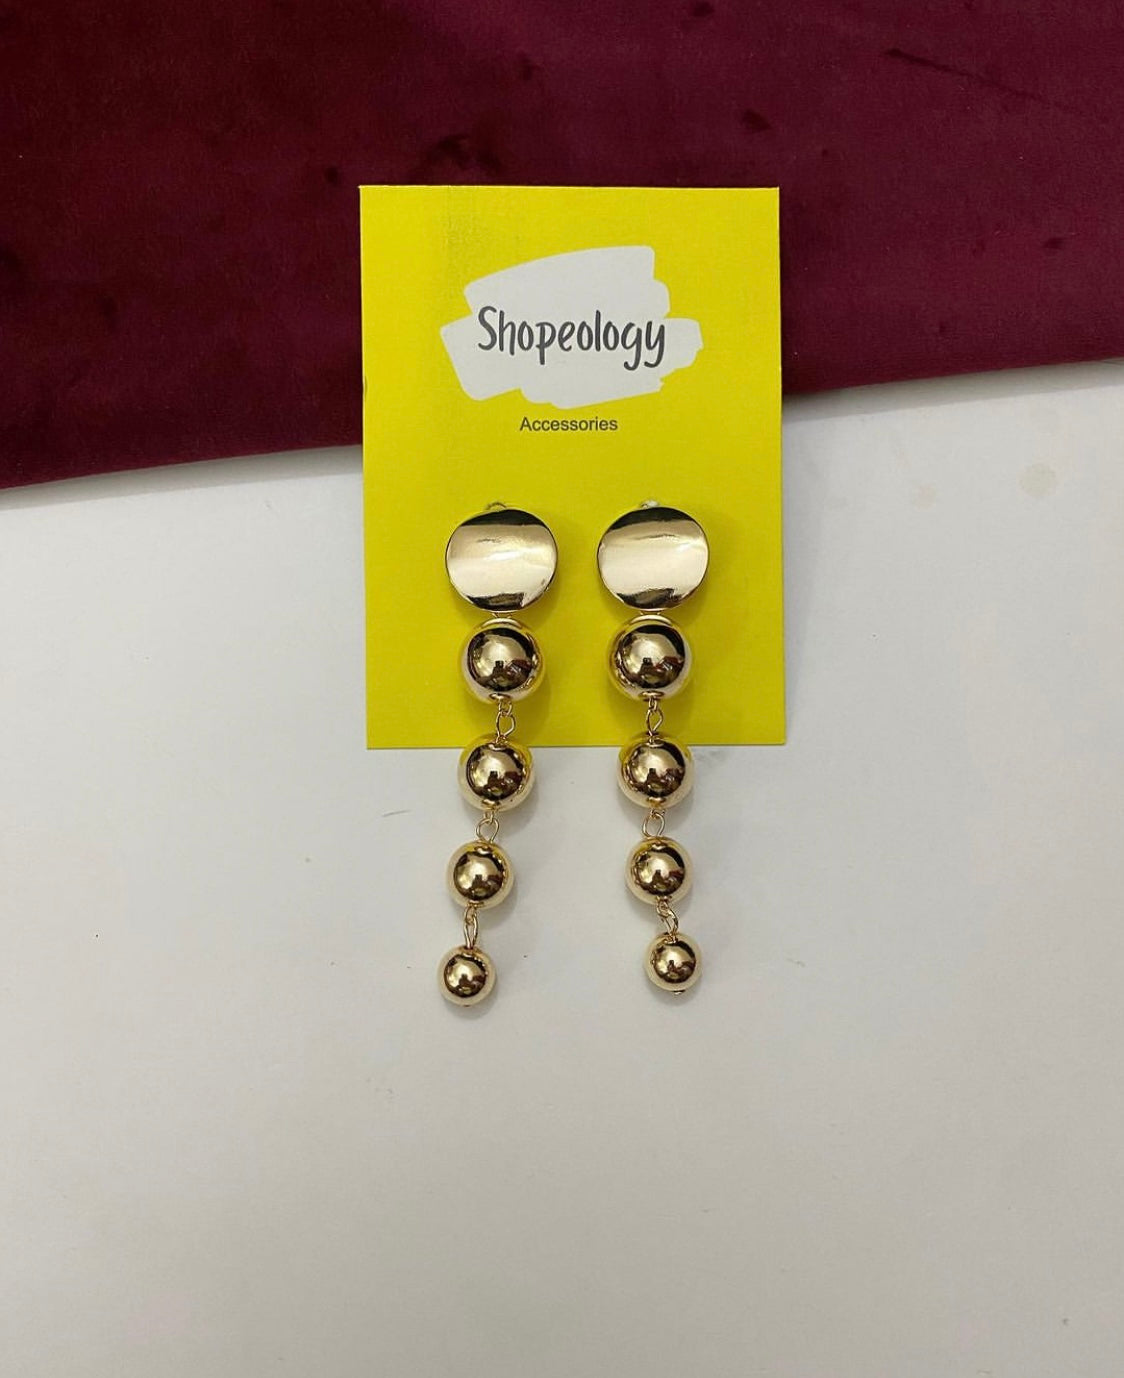 Dangling drop earrings - Shopeology